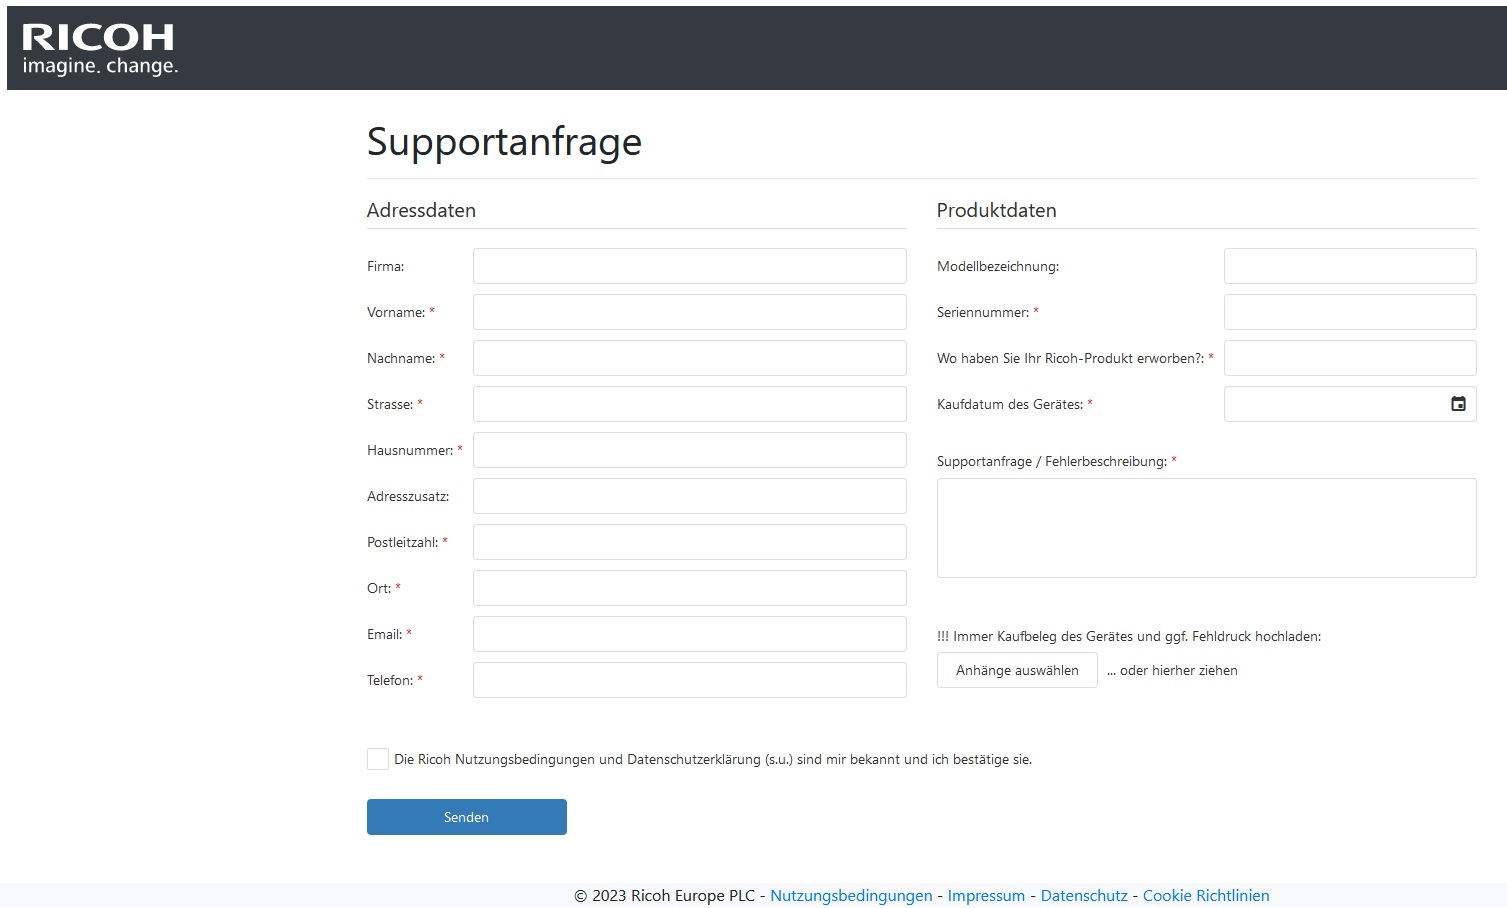 Ricoh Portal für Supportanfragen an das Ricoh Service-Team